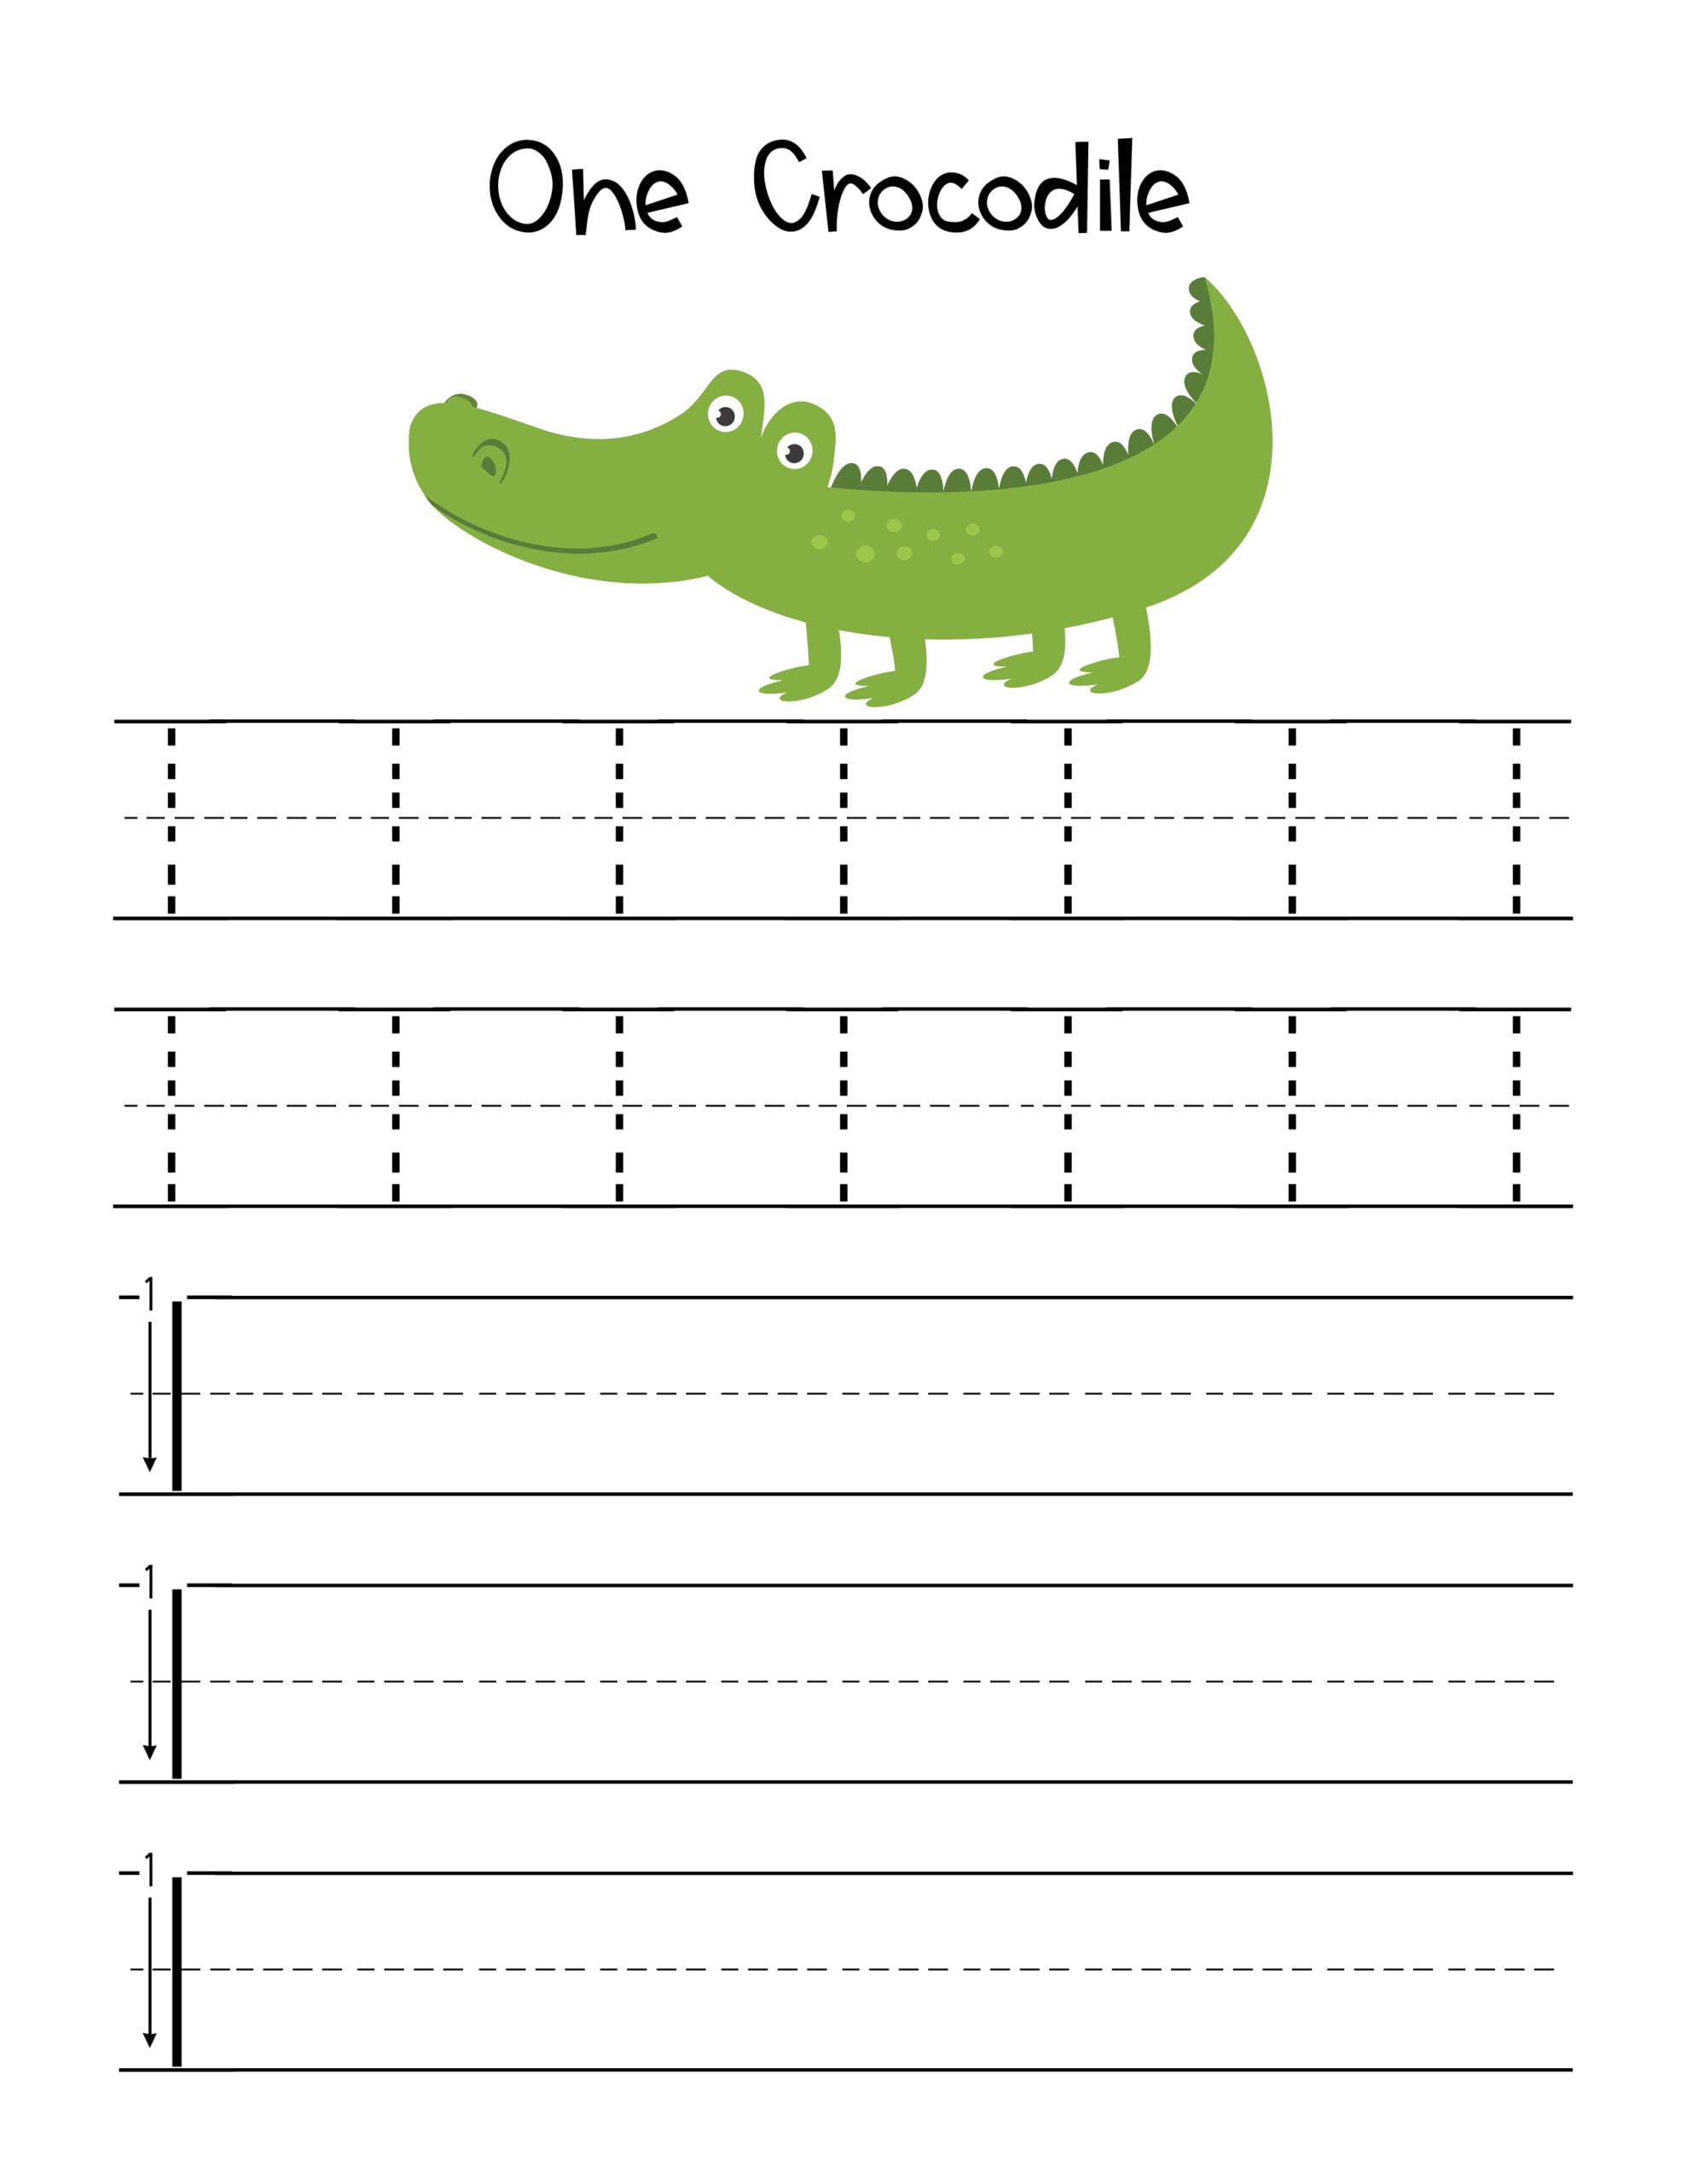 Crocodile Number One Printable Image